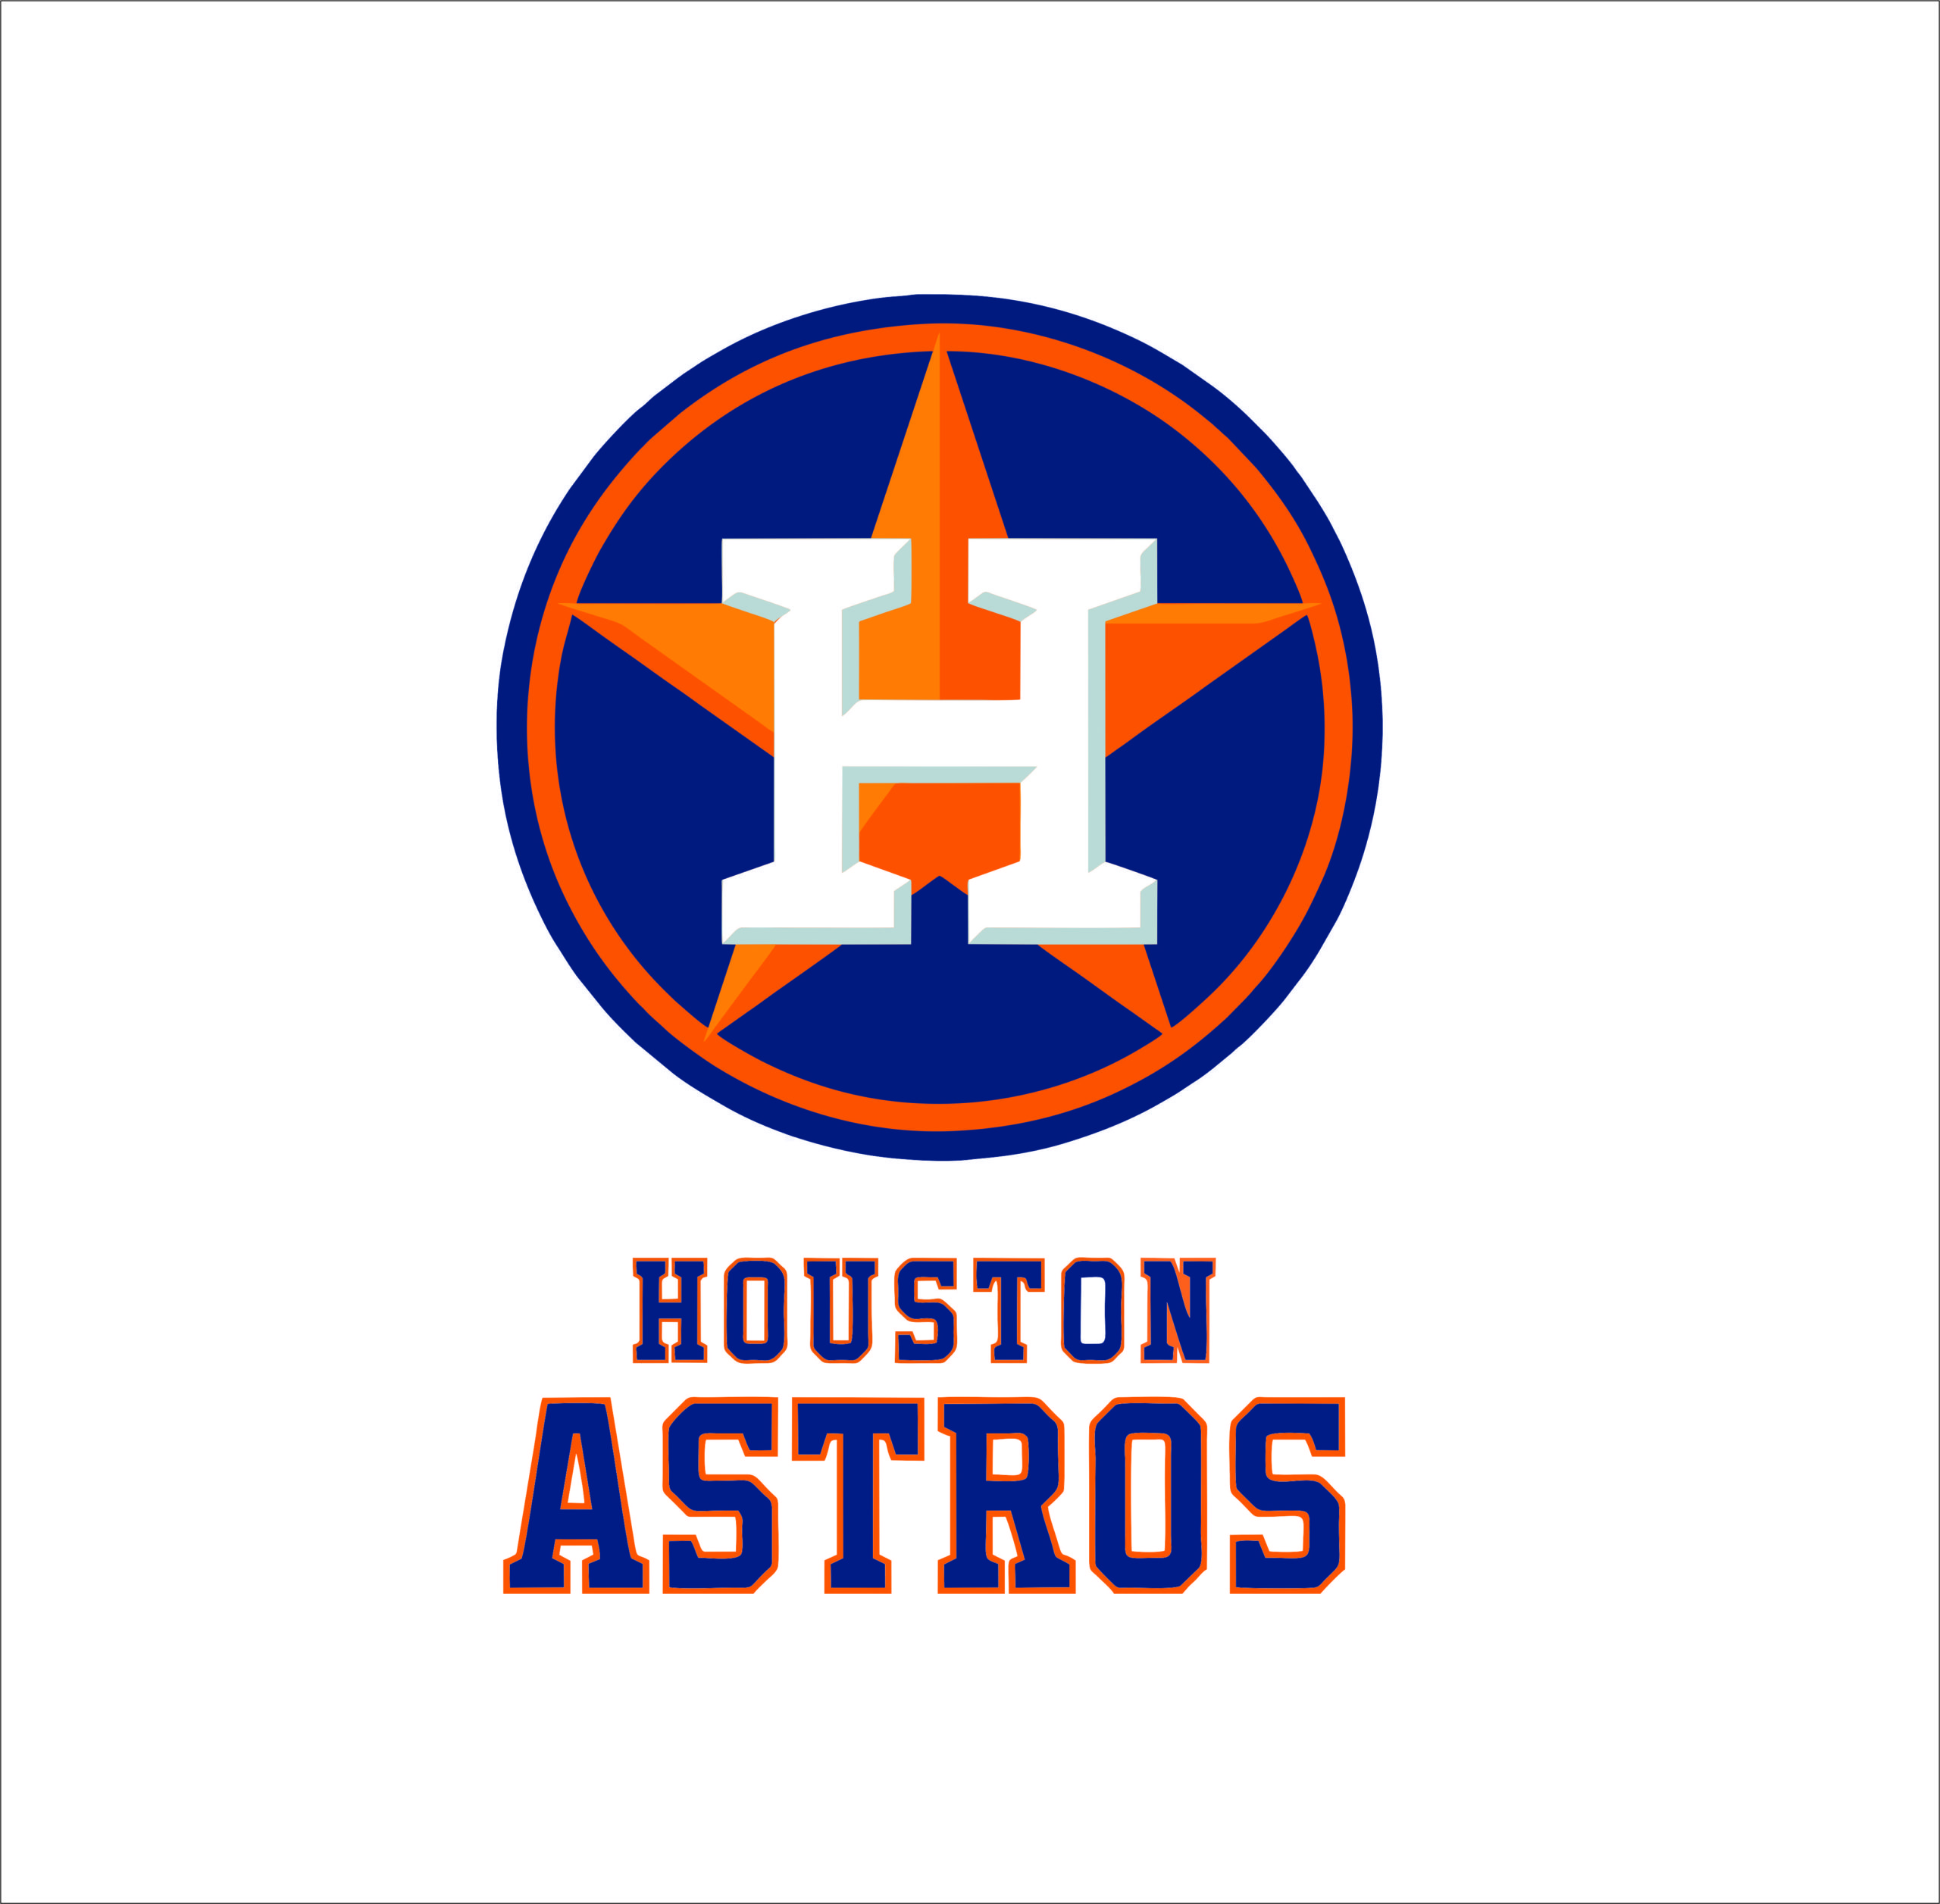 Houston Astros logo SVGprinted